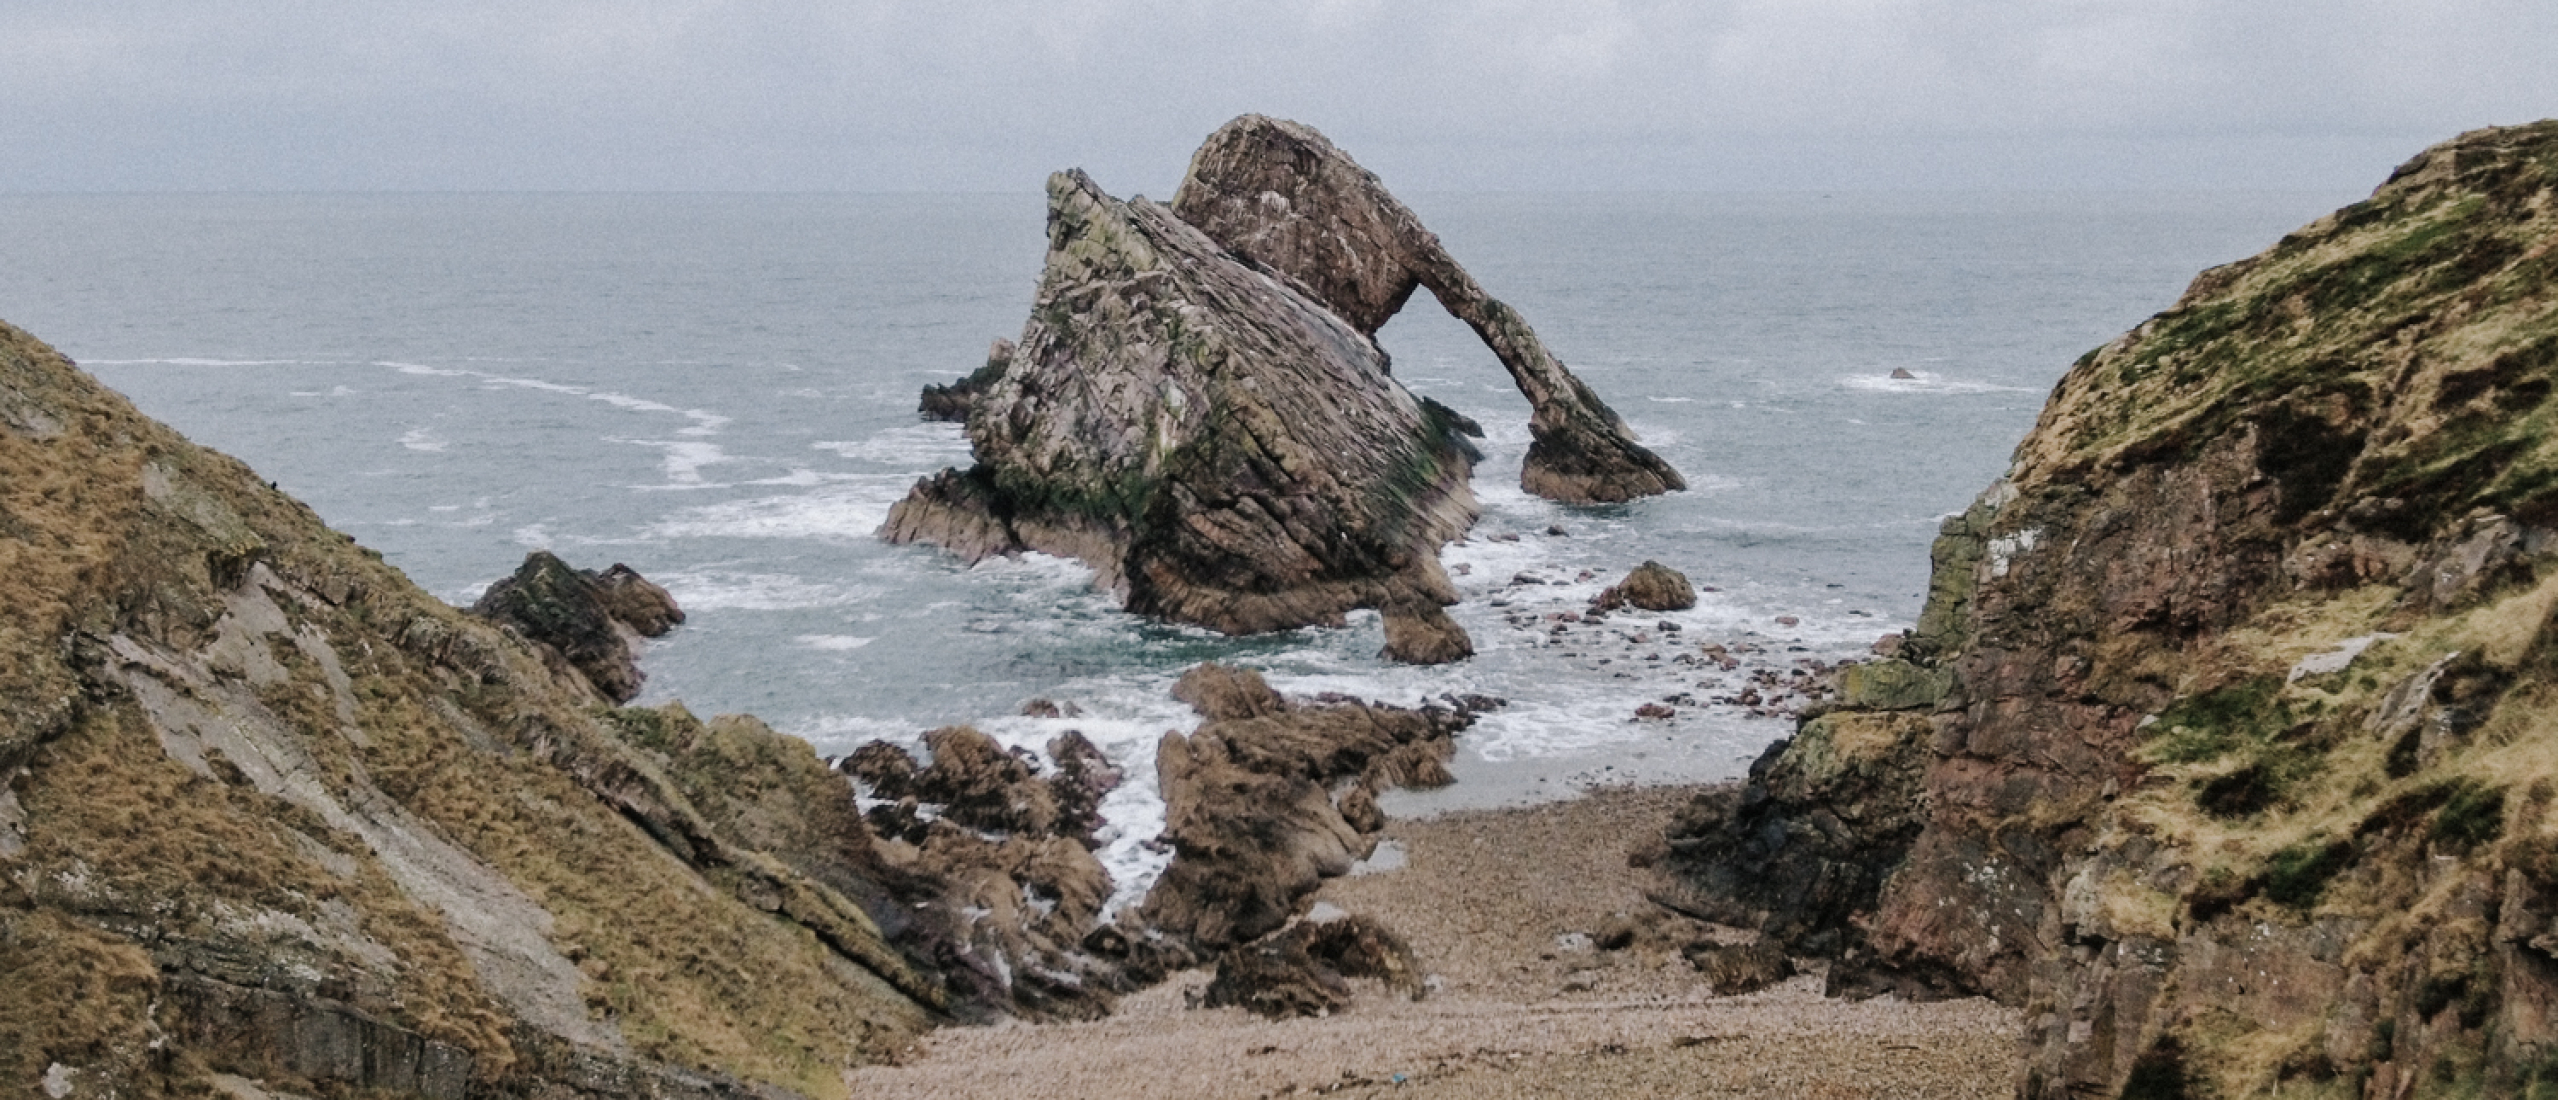 Bow Fiddle Rock: een bijzondere rots in de Moray Firth